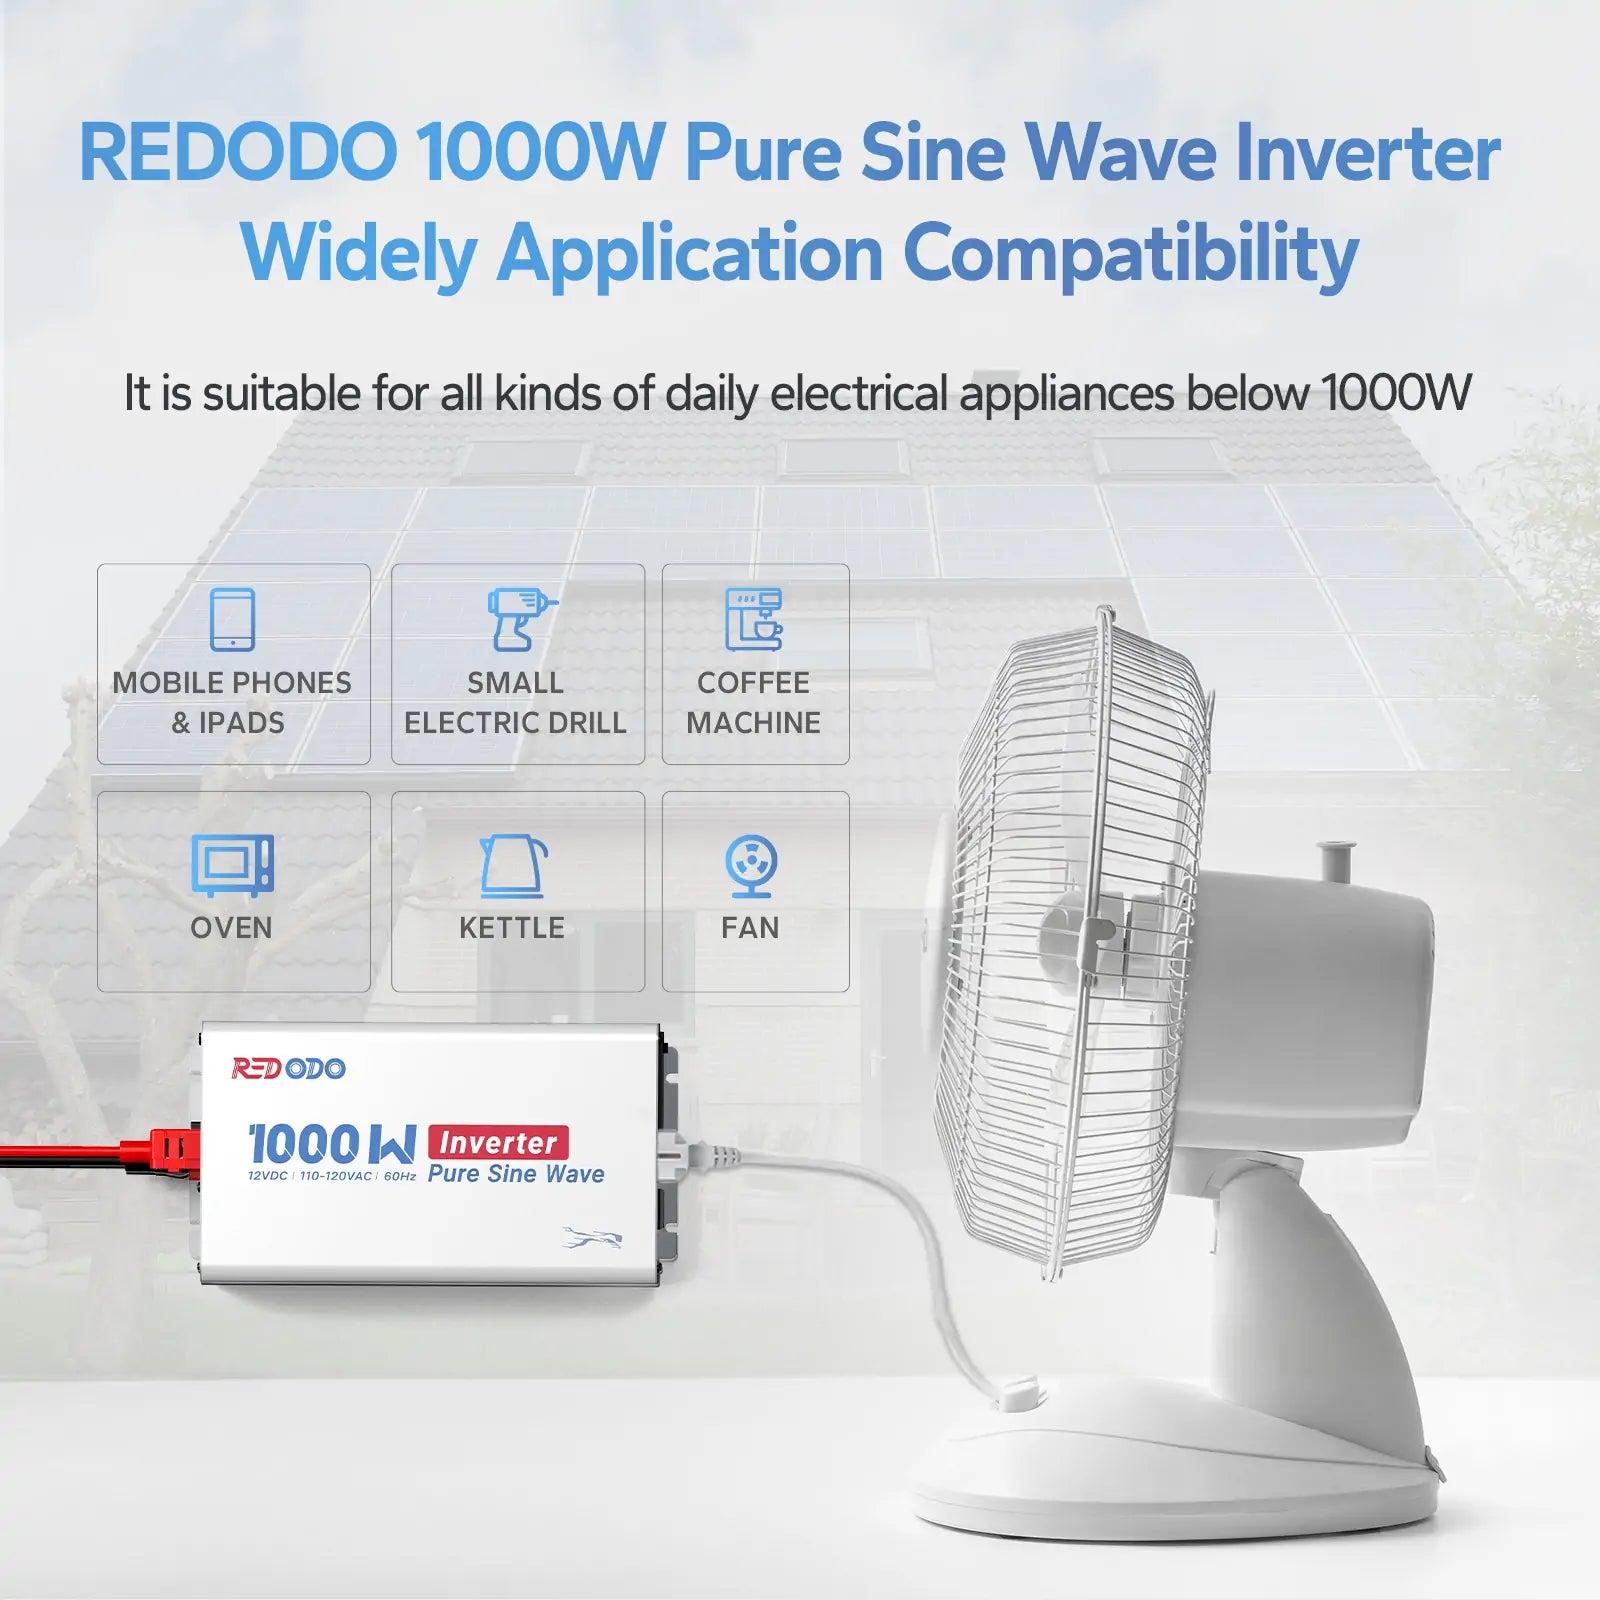 1000W Pure Sine Wave Inverter Redodo